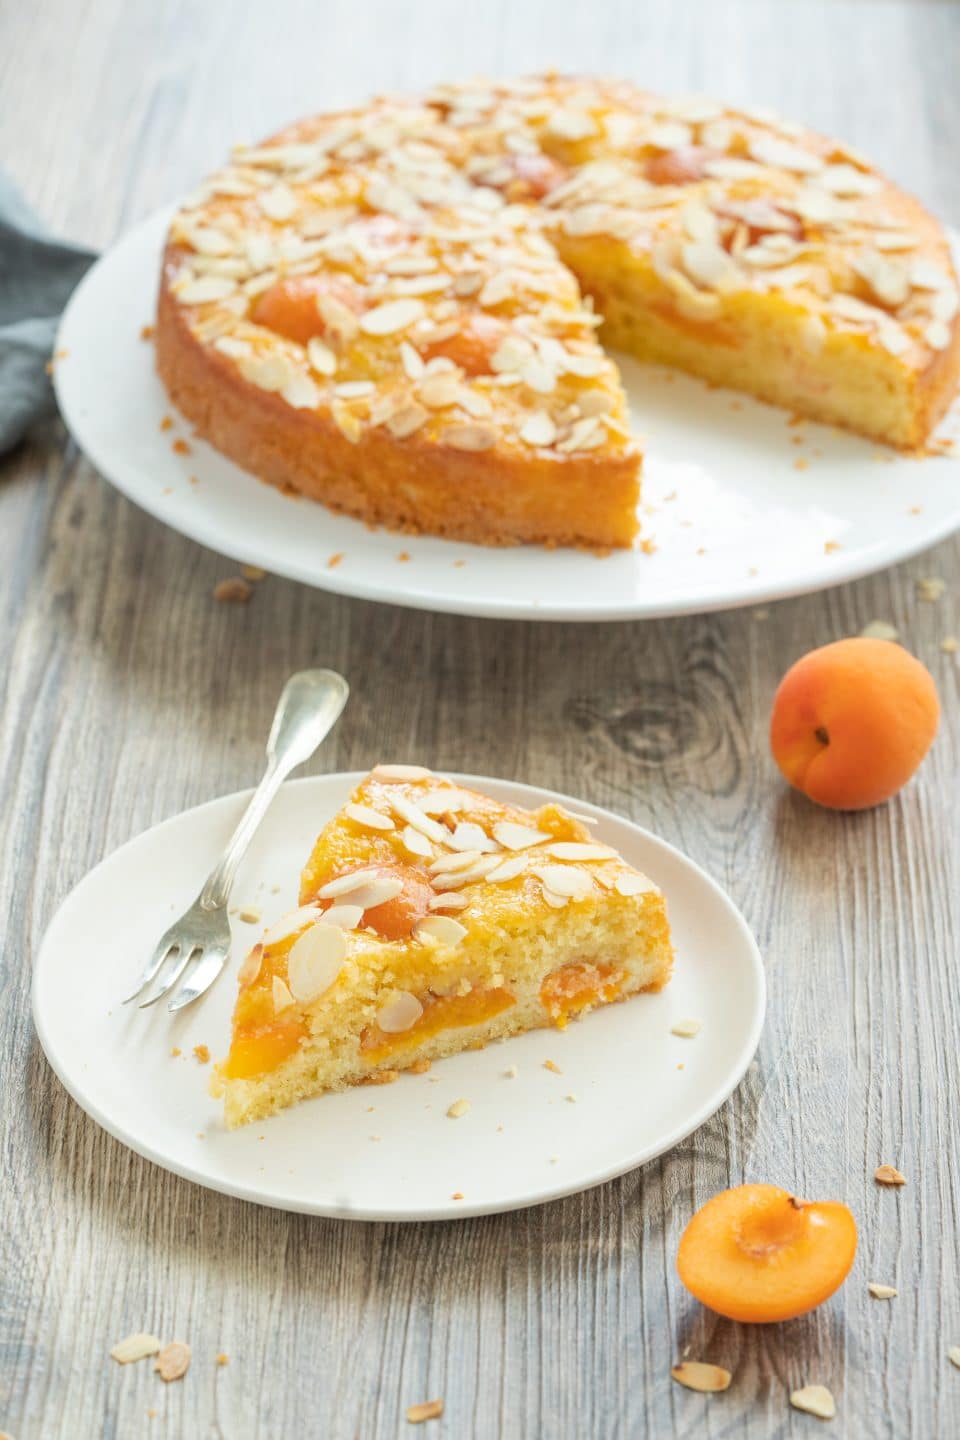 Apricot Almond Cake With Rosewater and Cardamom | Nigella's Recipes |  Nigella Lawson